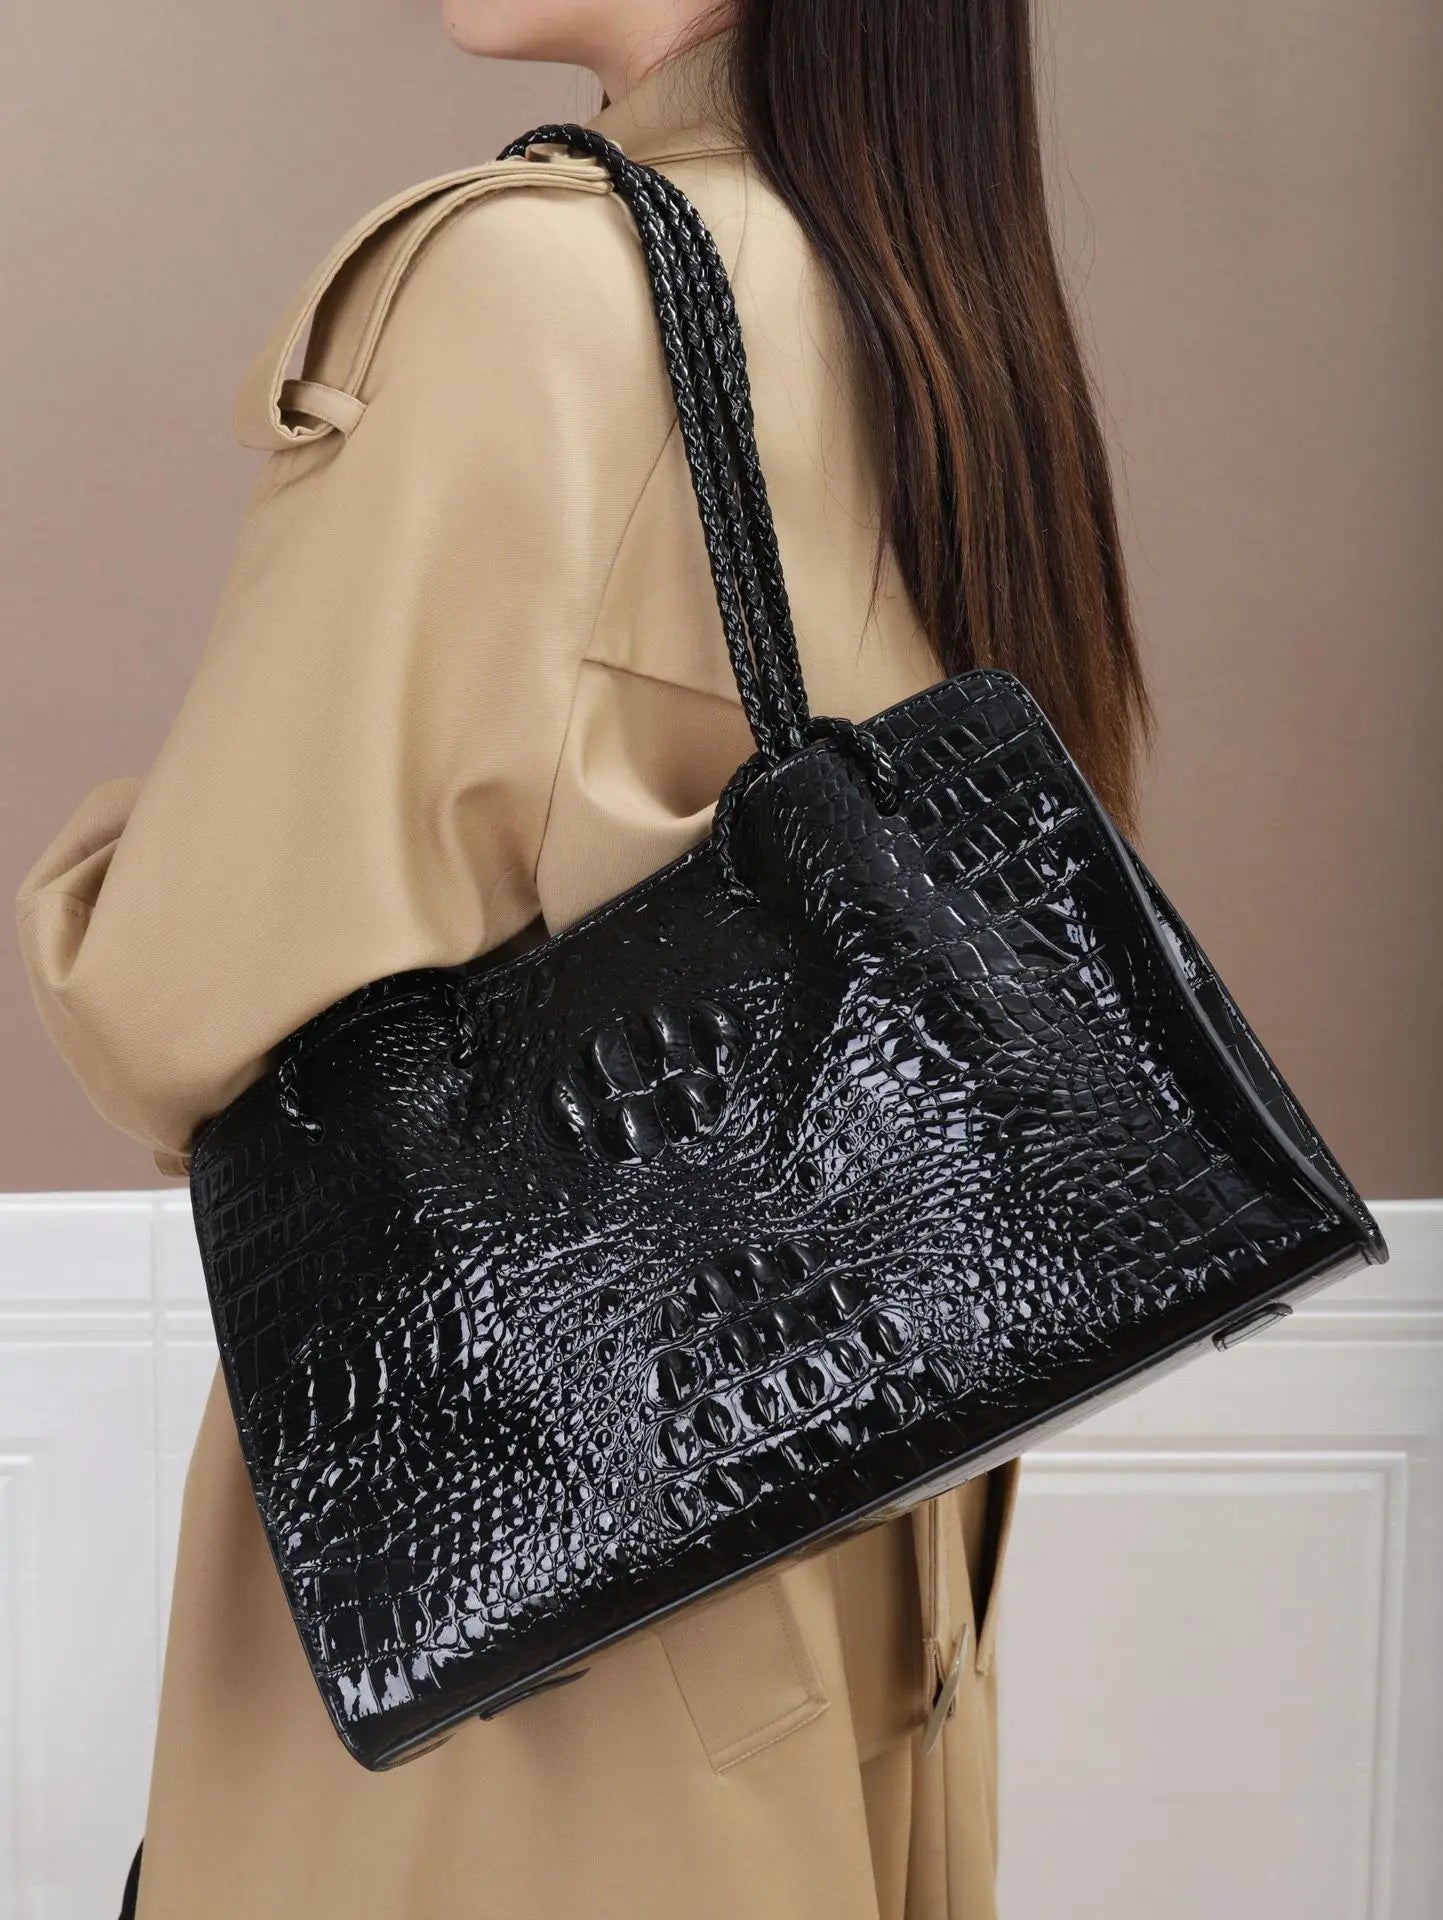 New High Capacity Women's Bag Purses and Handbags Fashion Long Shoulder Bag Leather Top Handle Shoulder Handbags with Zipper